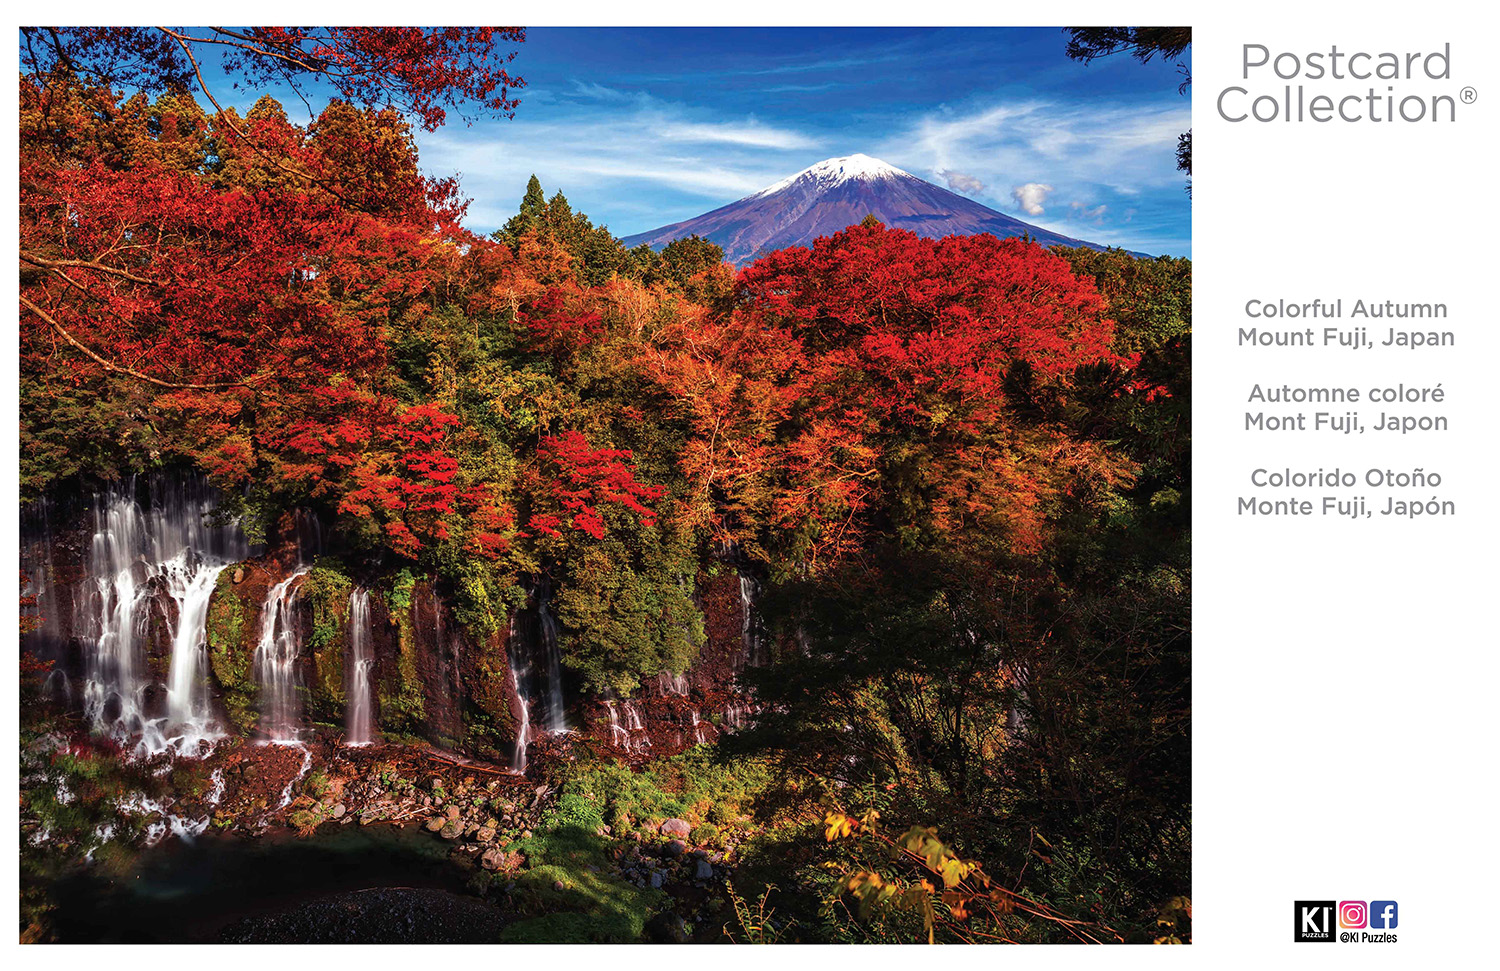 Colorful Autumn Mount Fuji, Japan